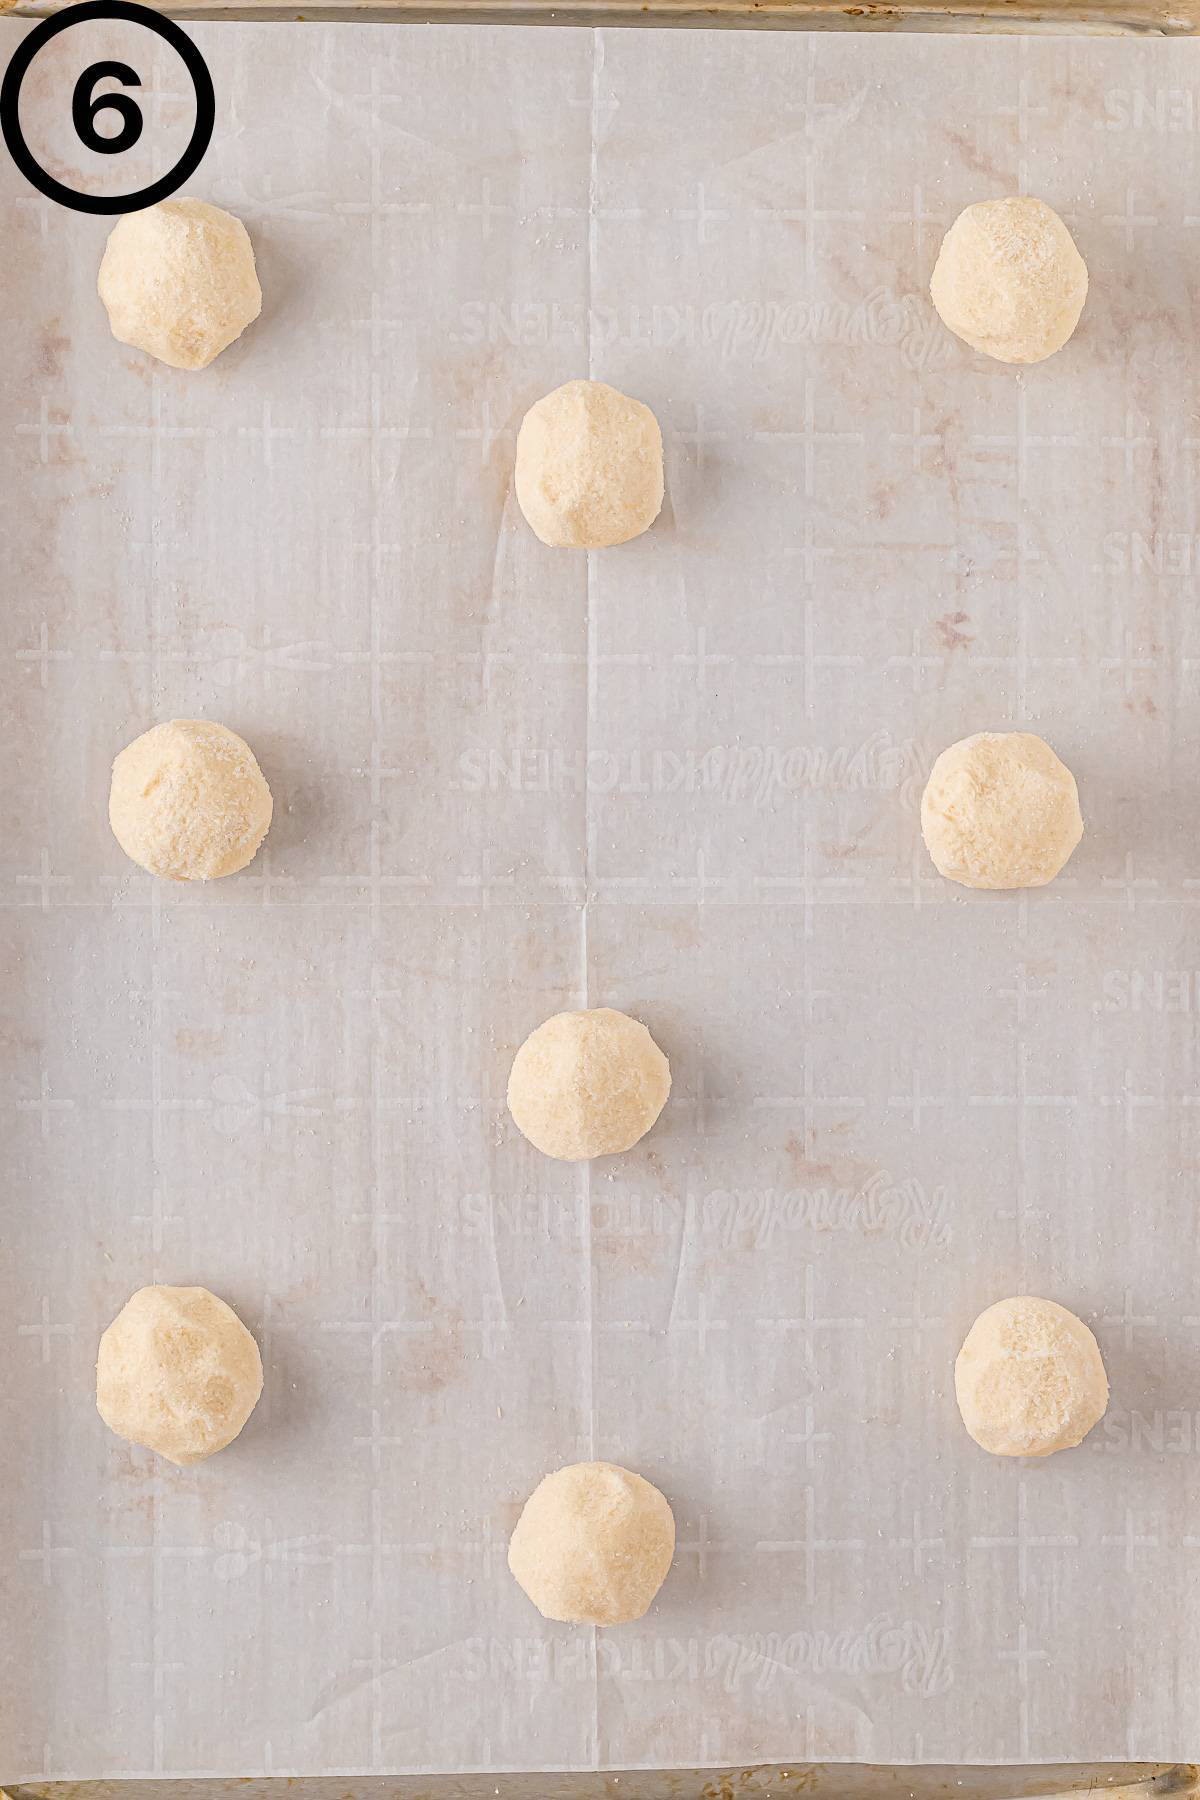 Sugar cookie dough balls on a baking sheet.